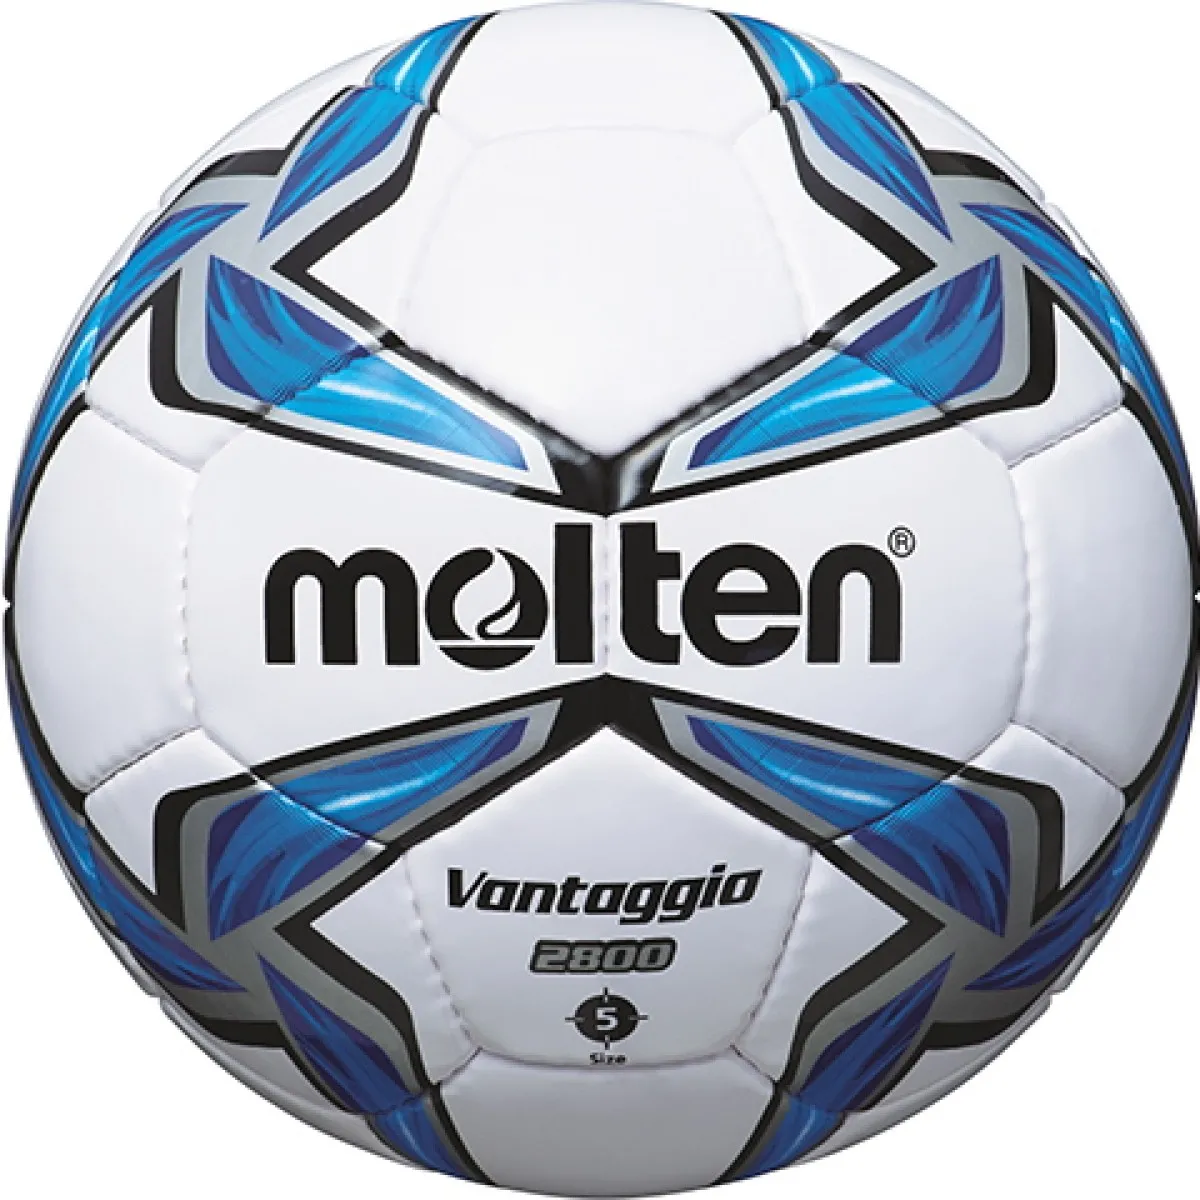 soccer ball size 5, colour white / blue / silver